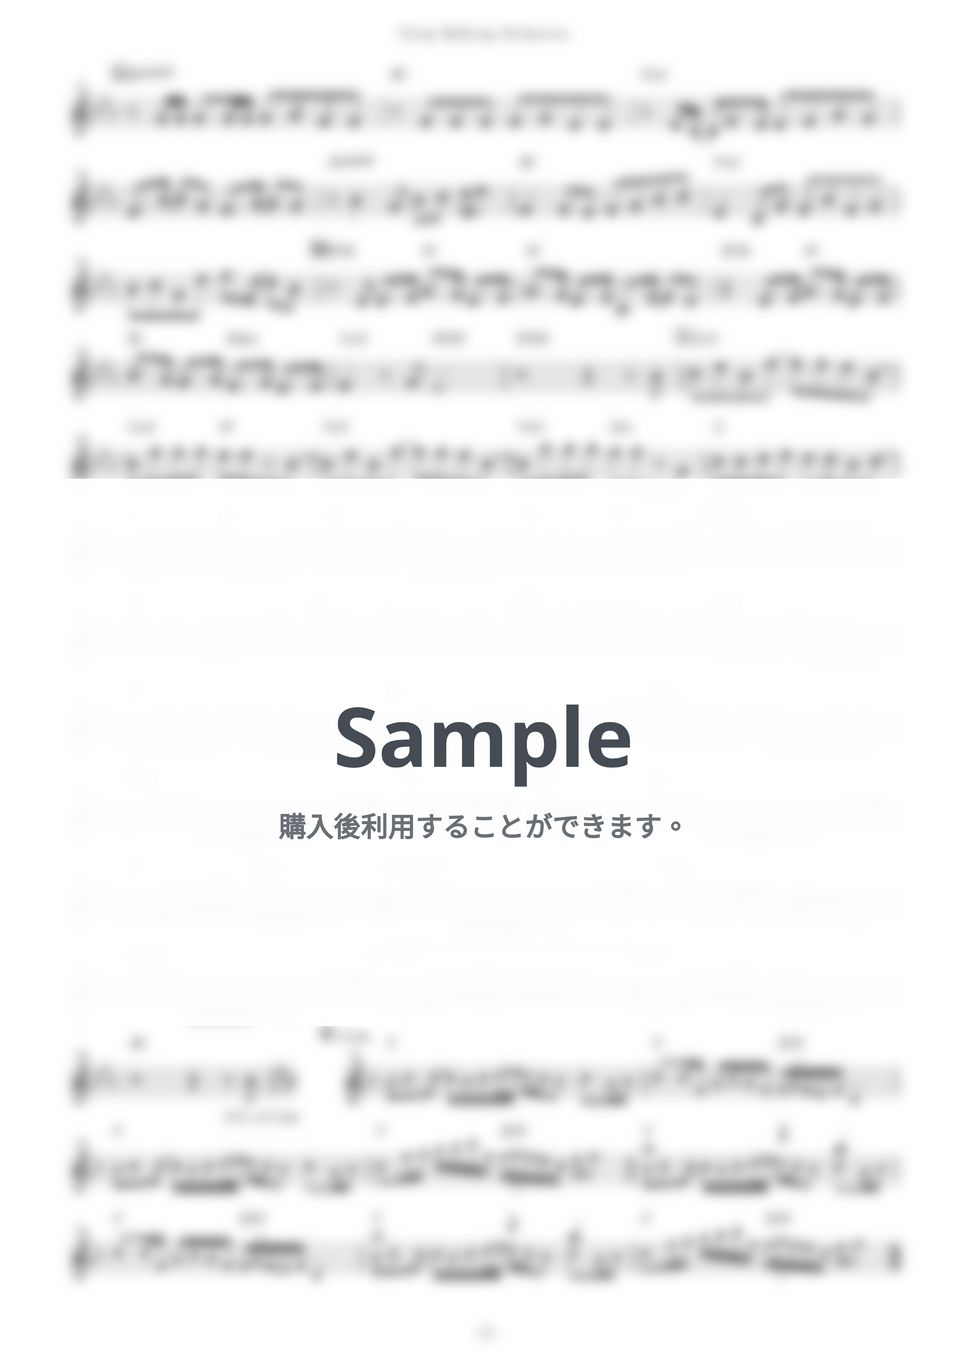 BUMP OF CHICKEN - Sleep Walking Orchestra (『ダンジョン飯』 / in Bb) by muta-sax